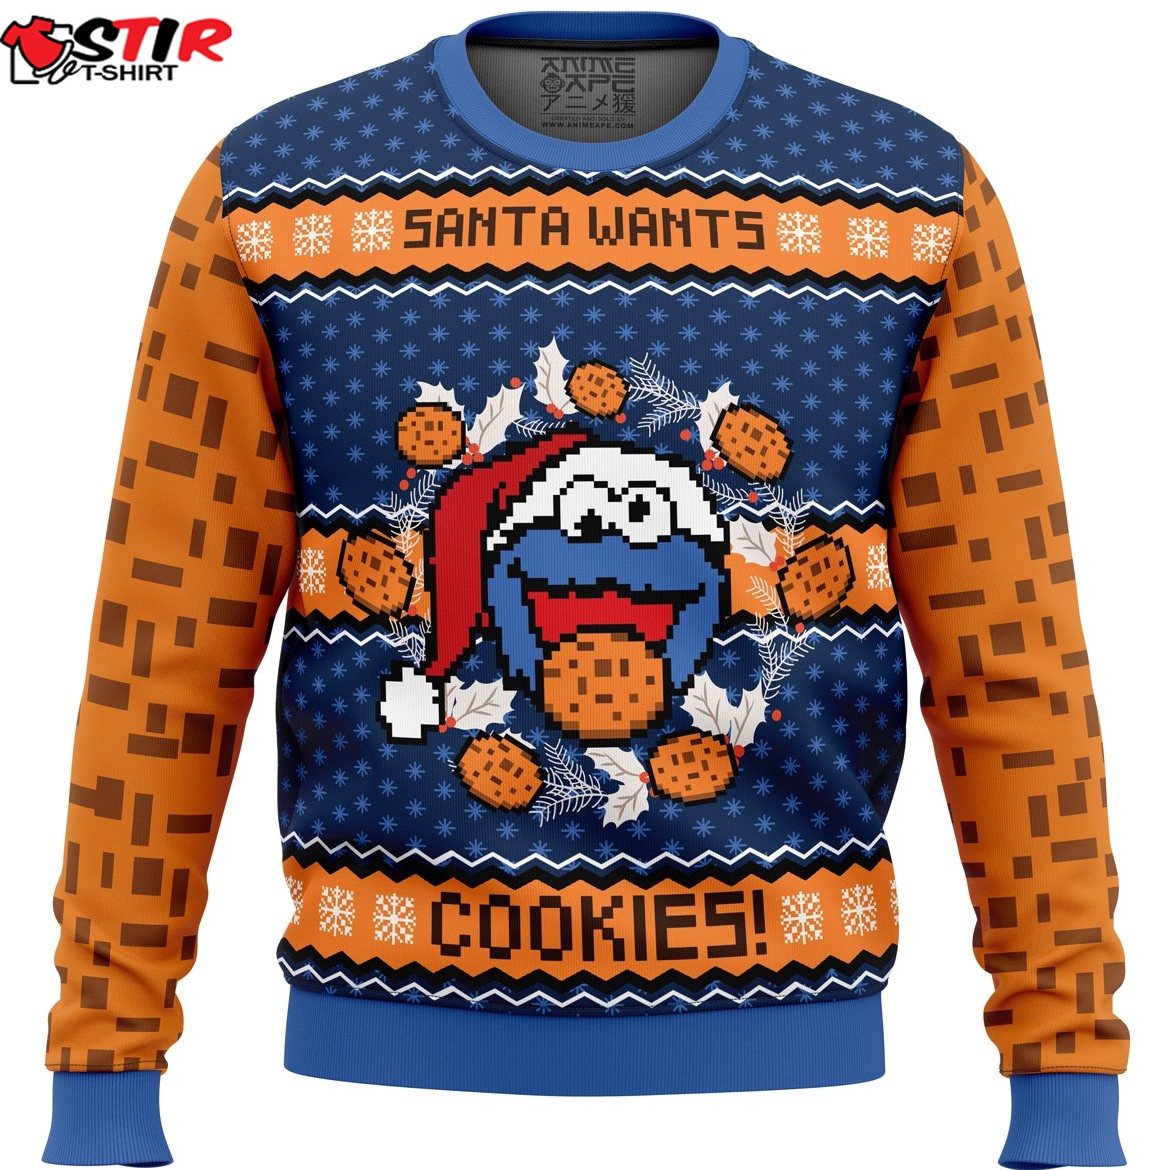 Santa Wants Cookies! Ugly Christmas Sweater Stirtshirt